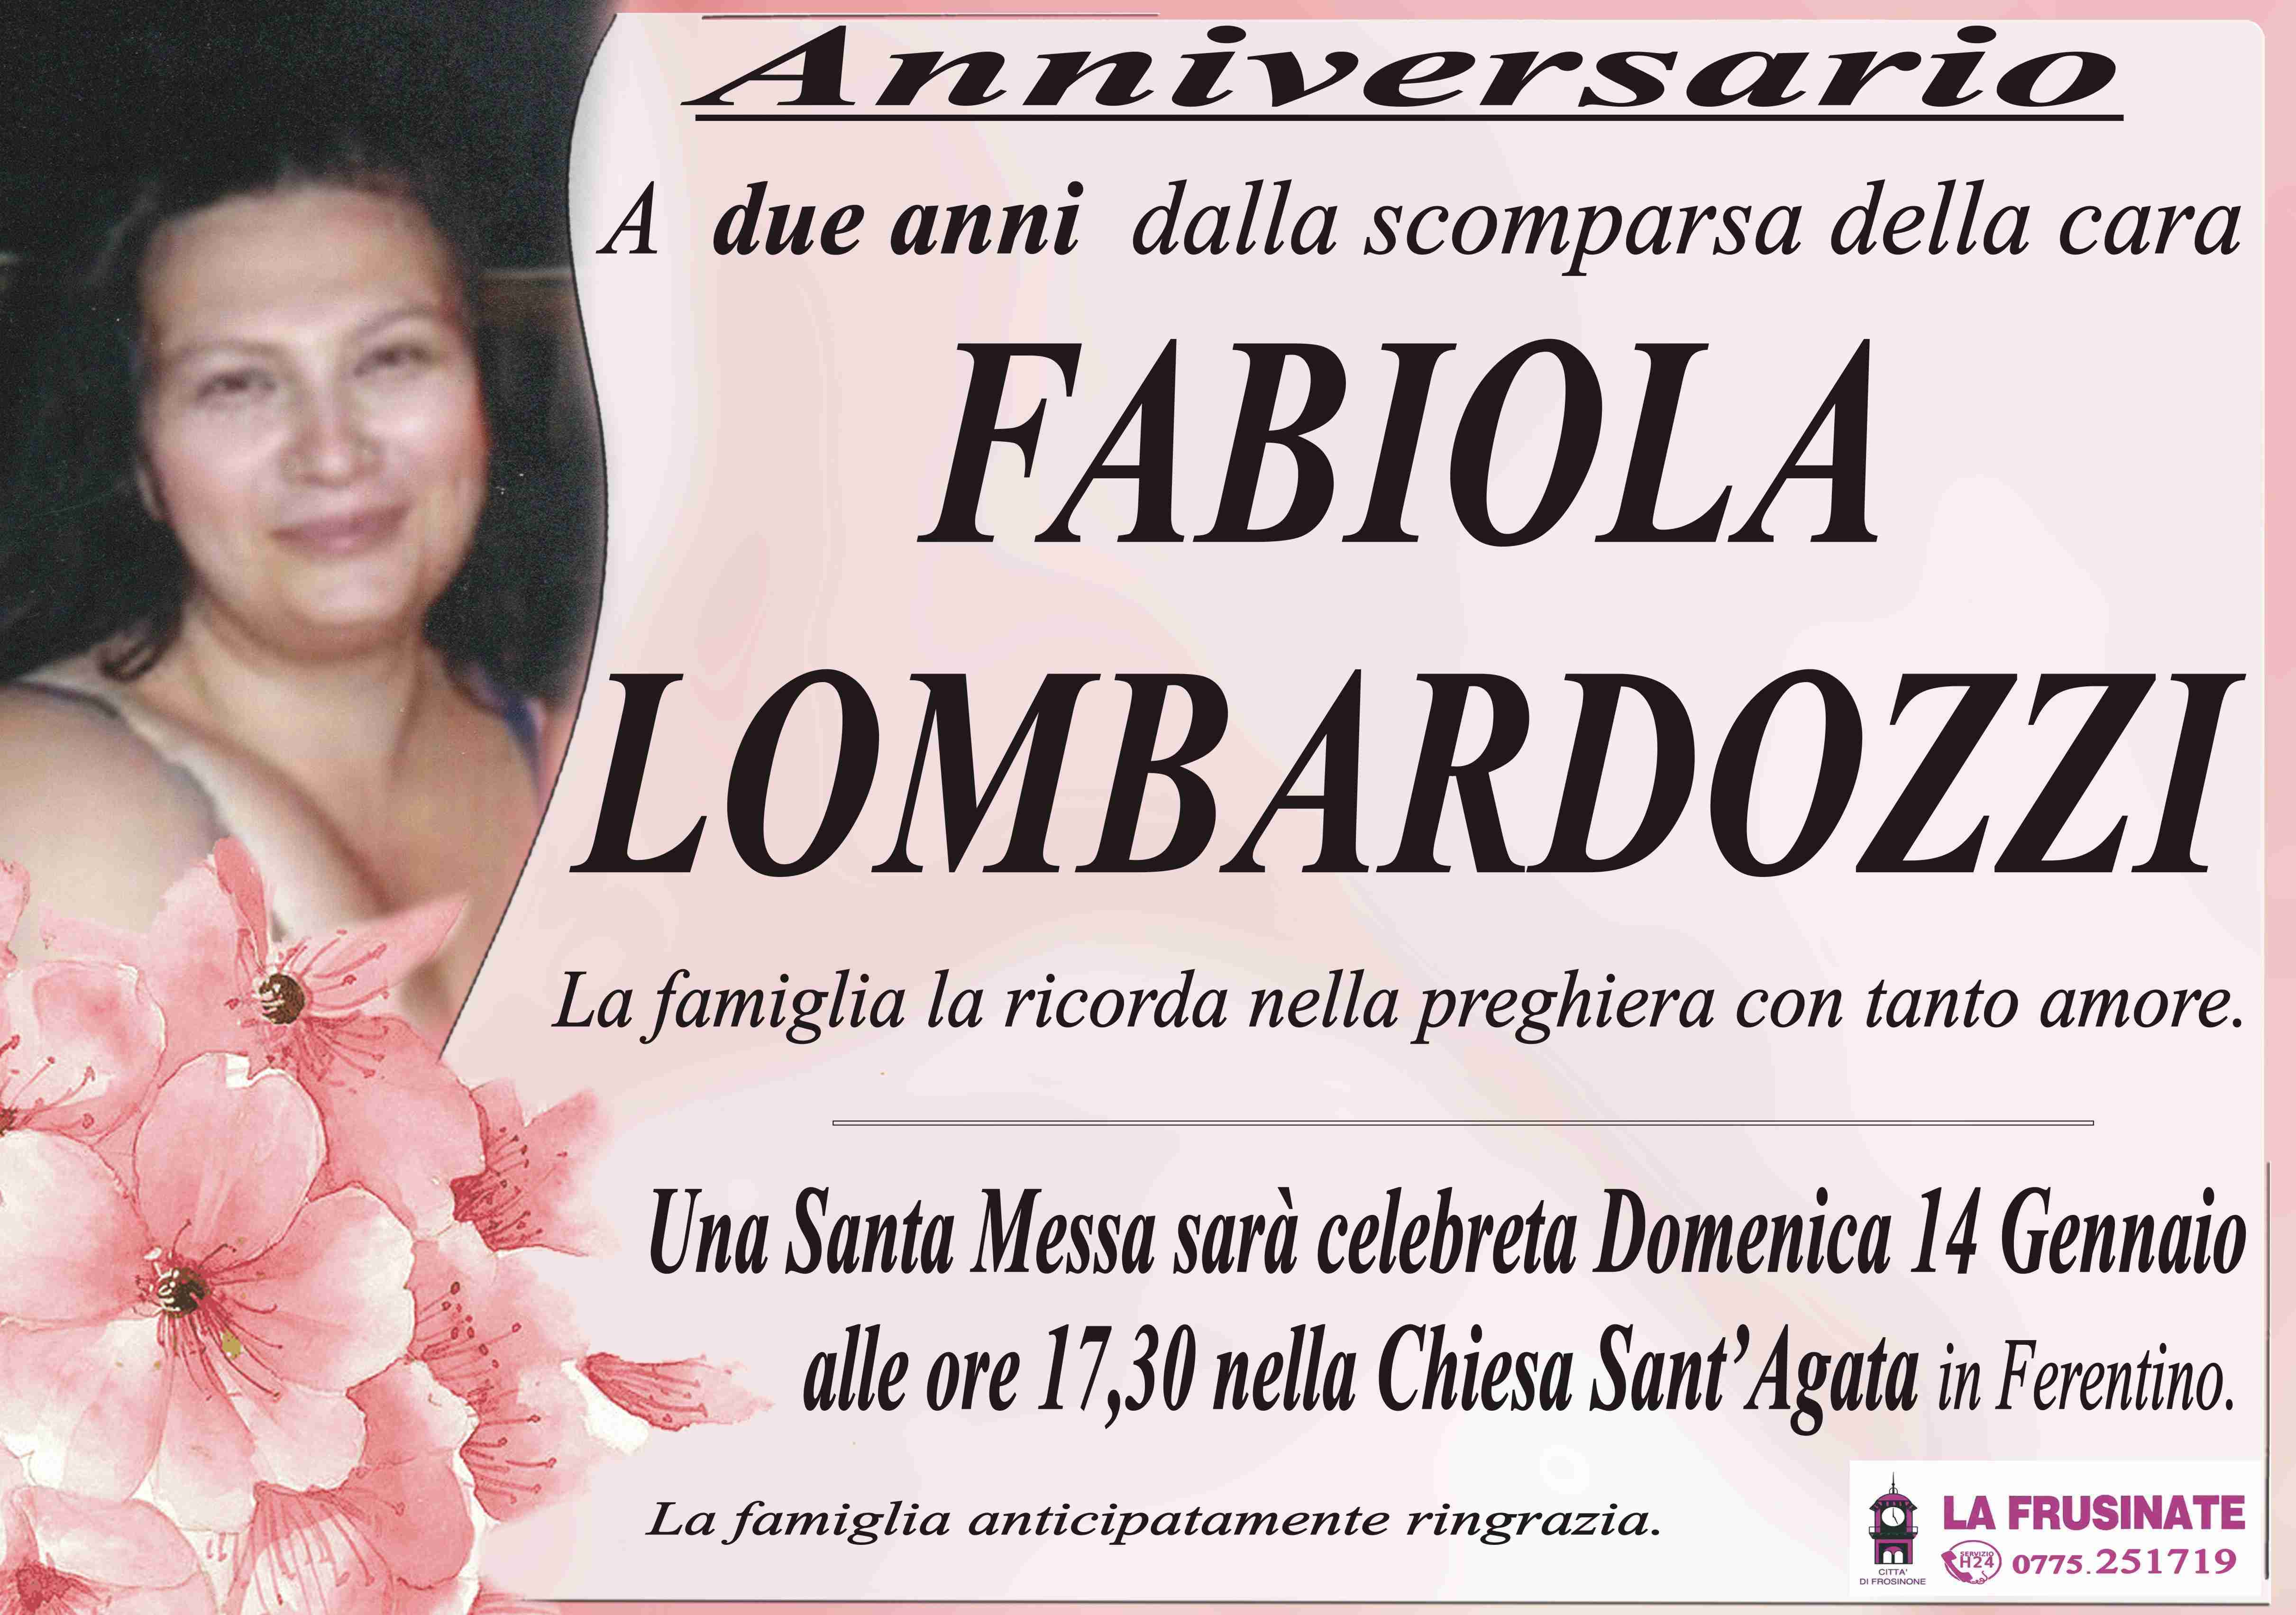 Fabiola Lombardozzi